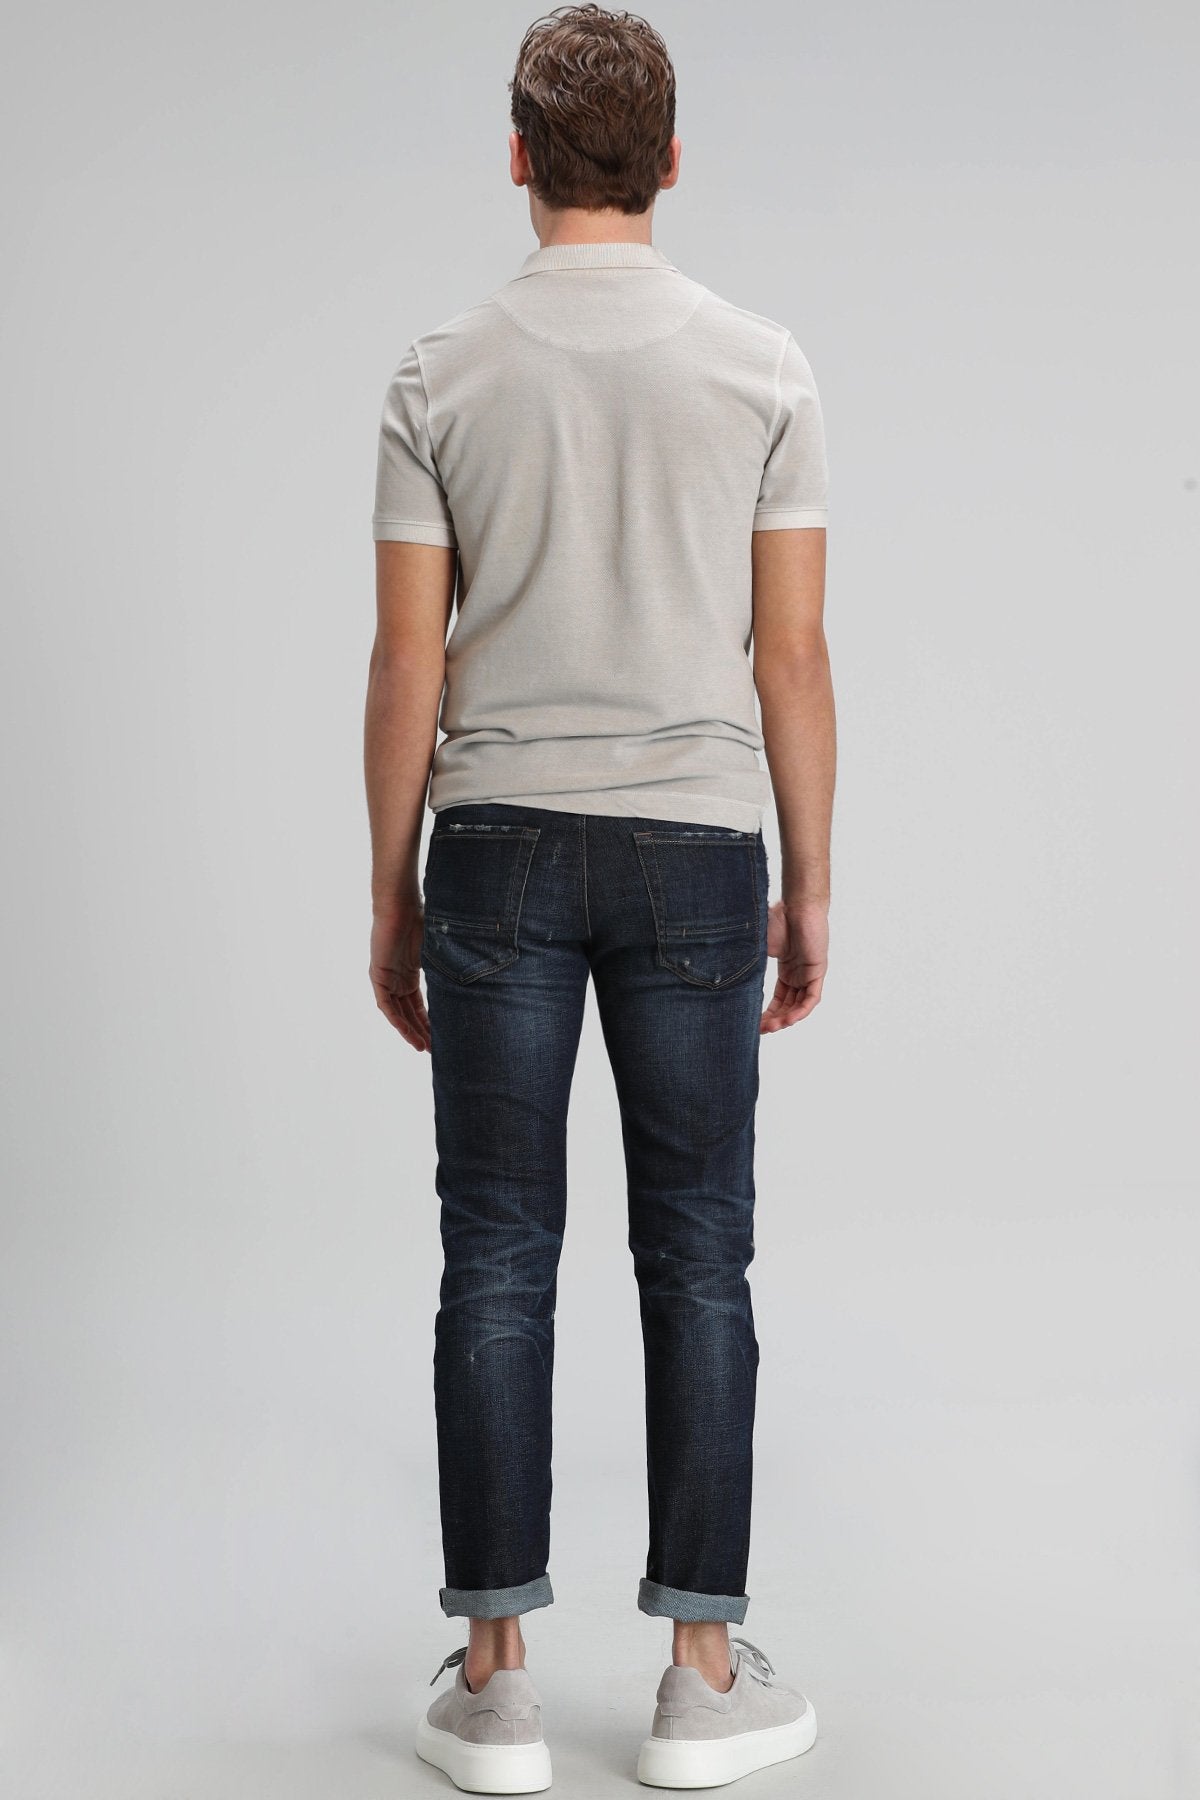 Erdos Fashion Jeans Slim Fit Indigo